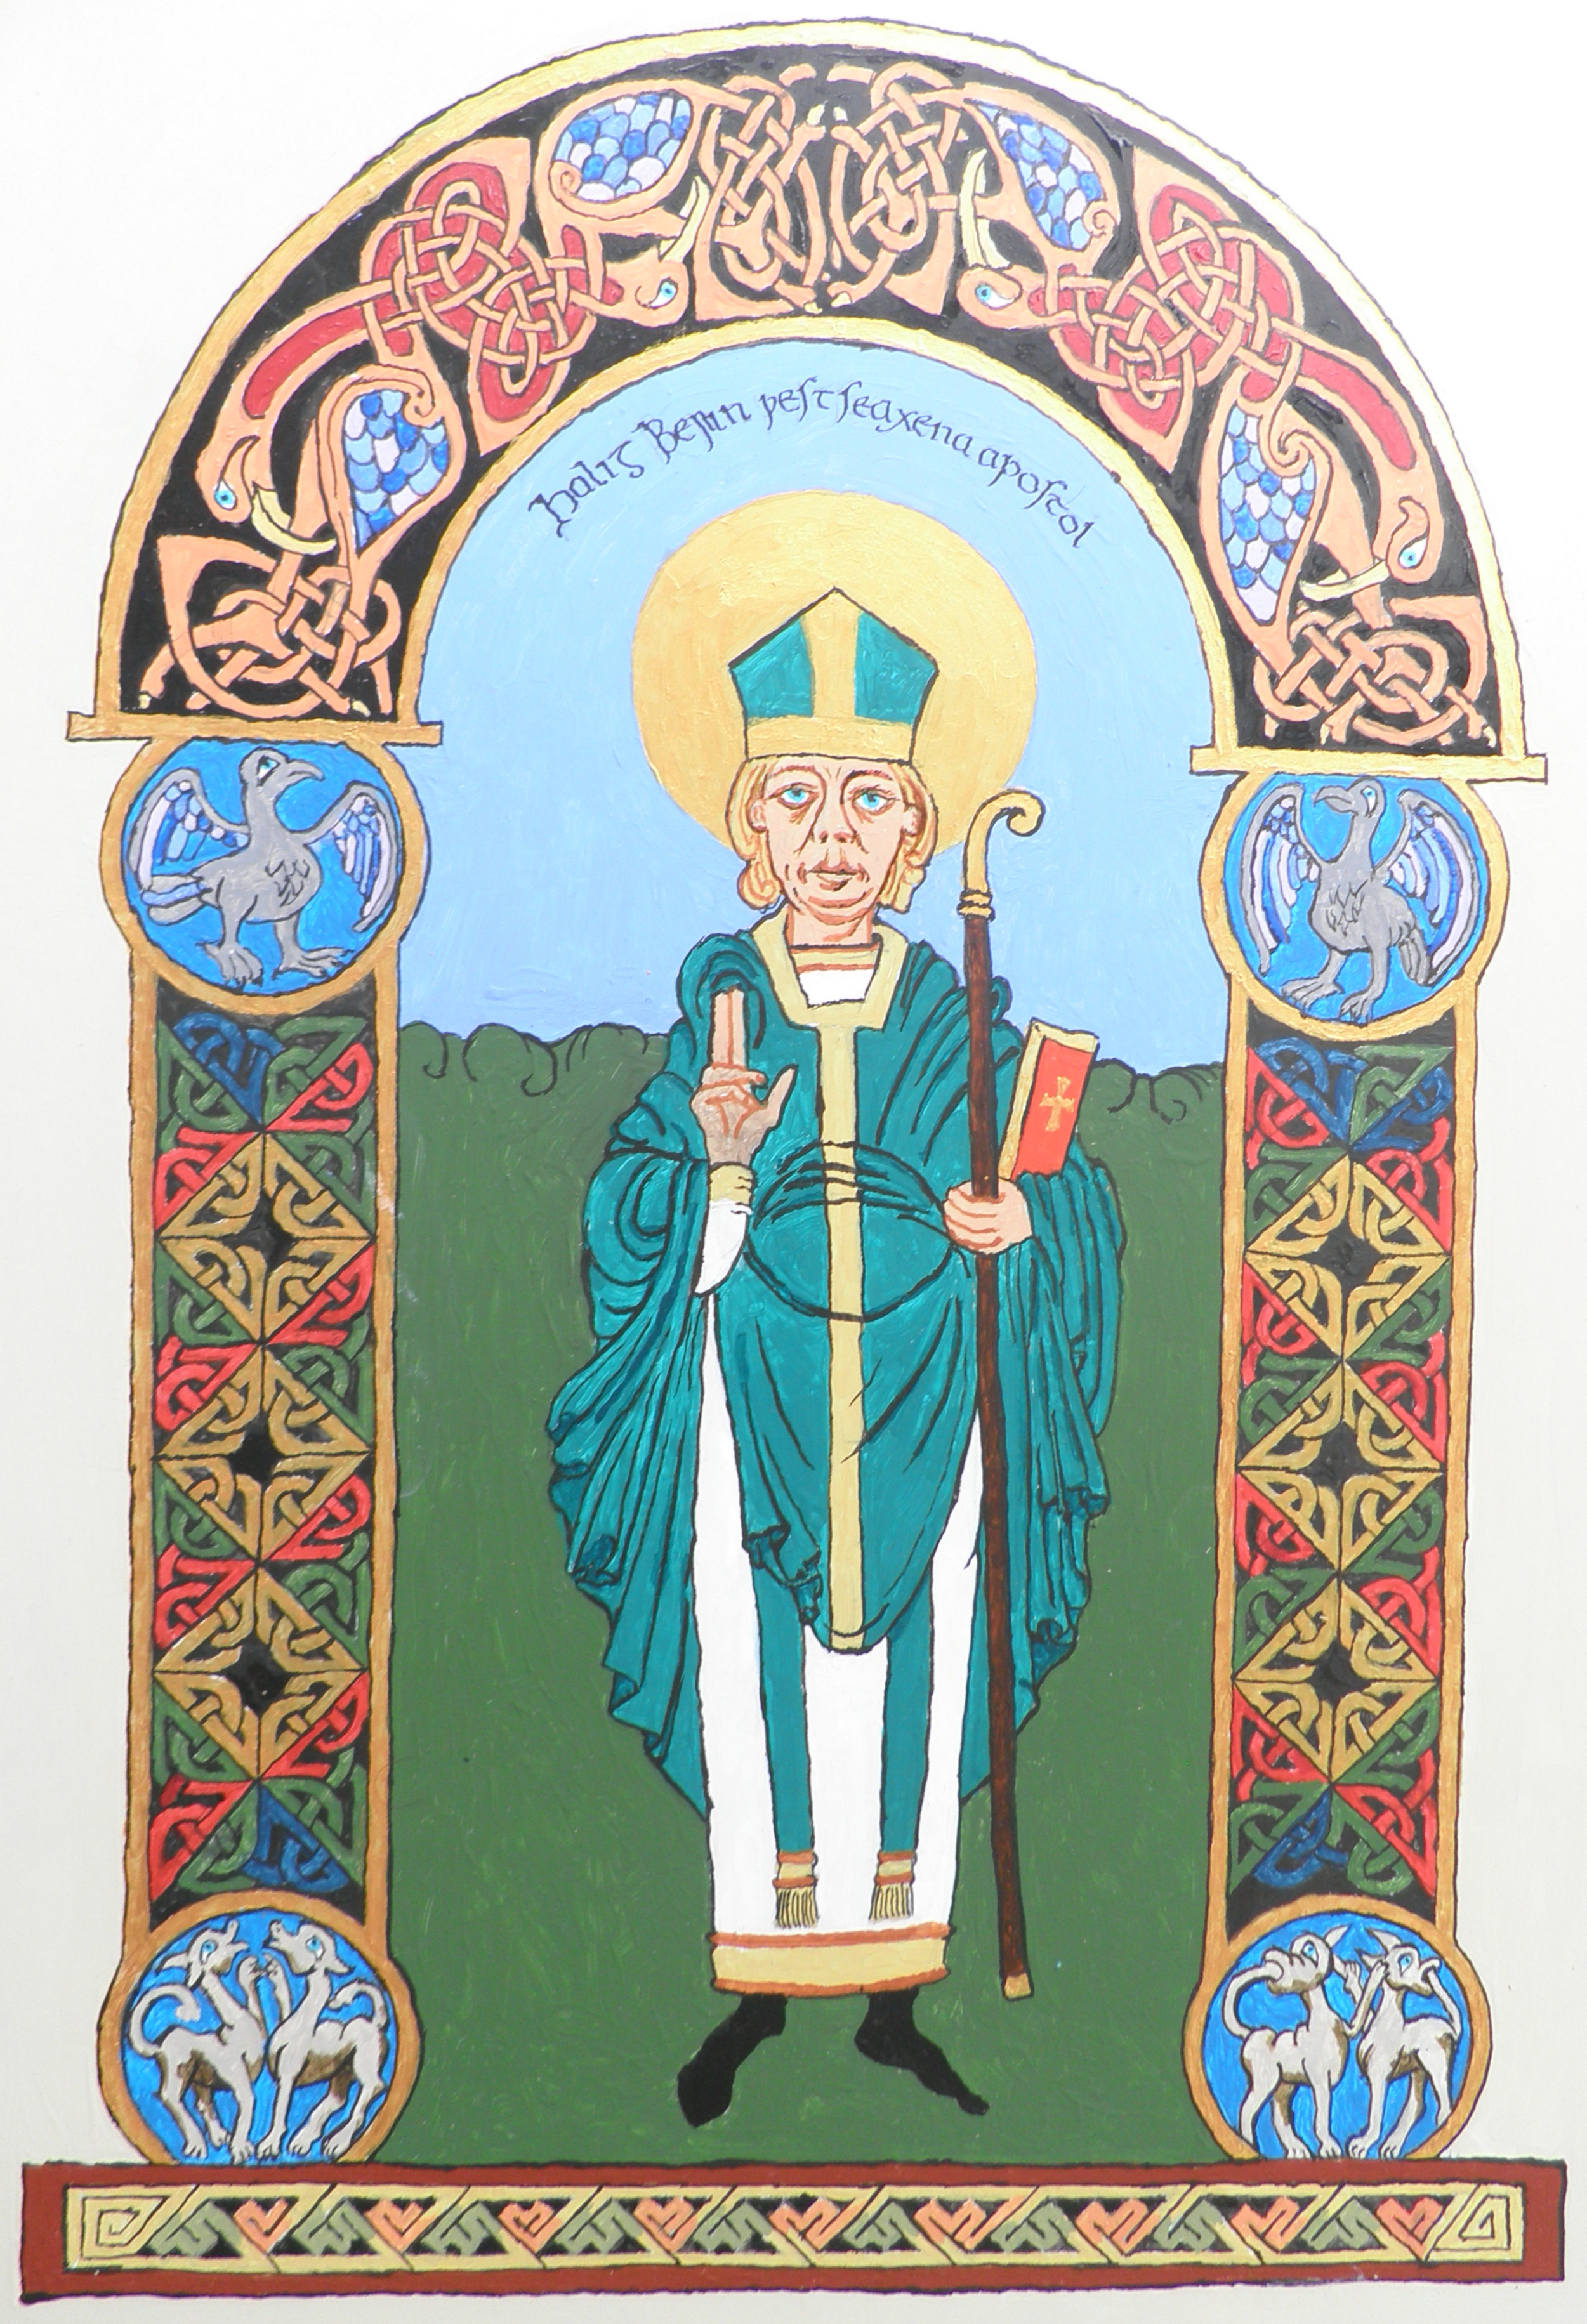 Saint Birinus the Apostle of Wessex